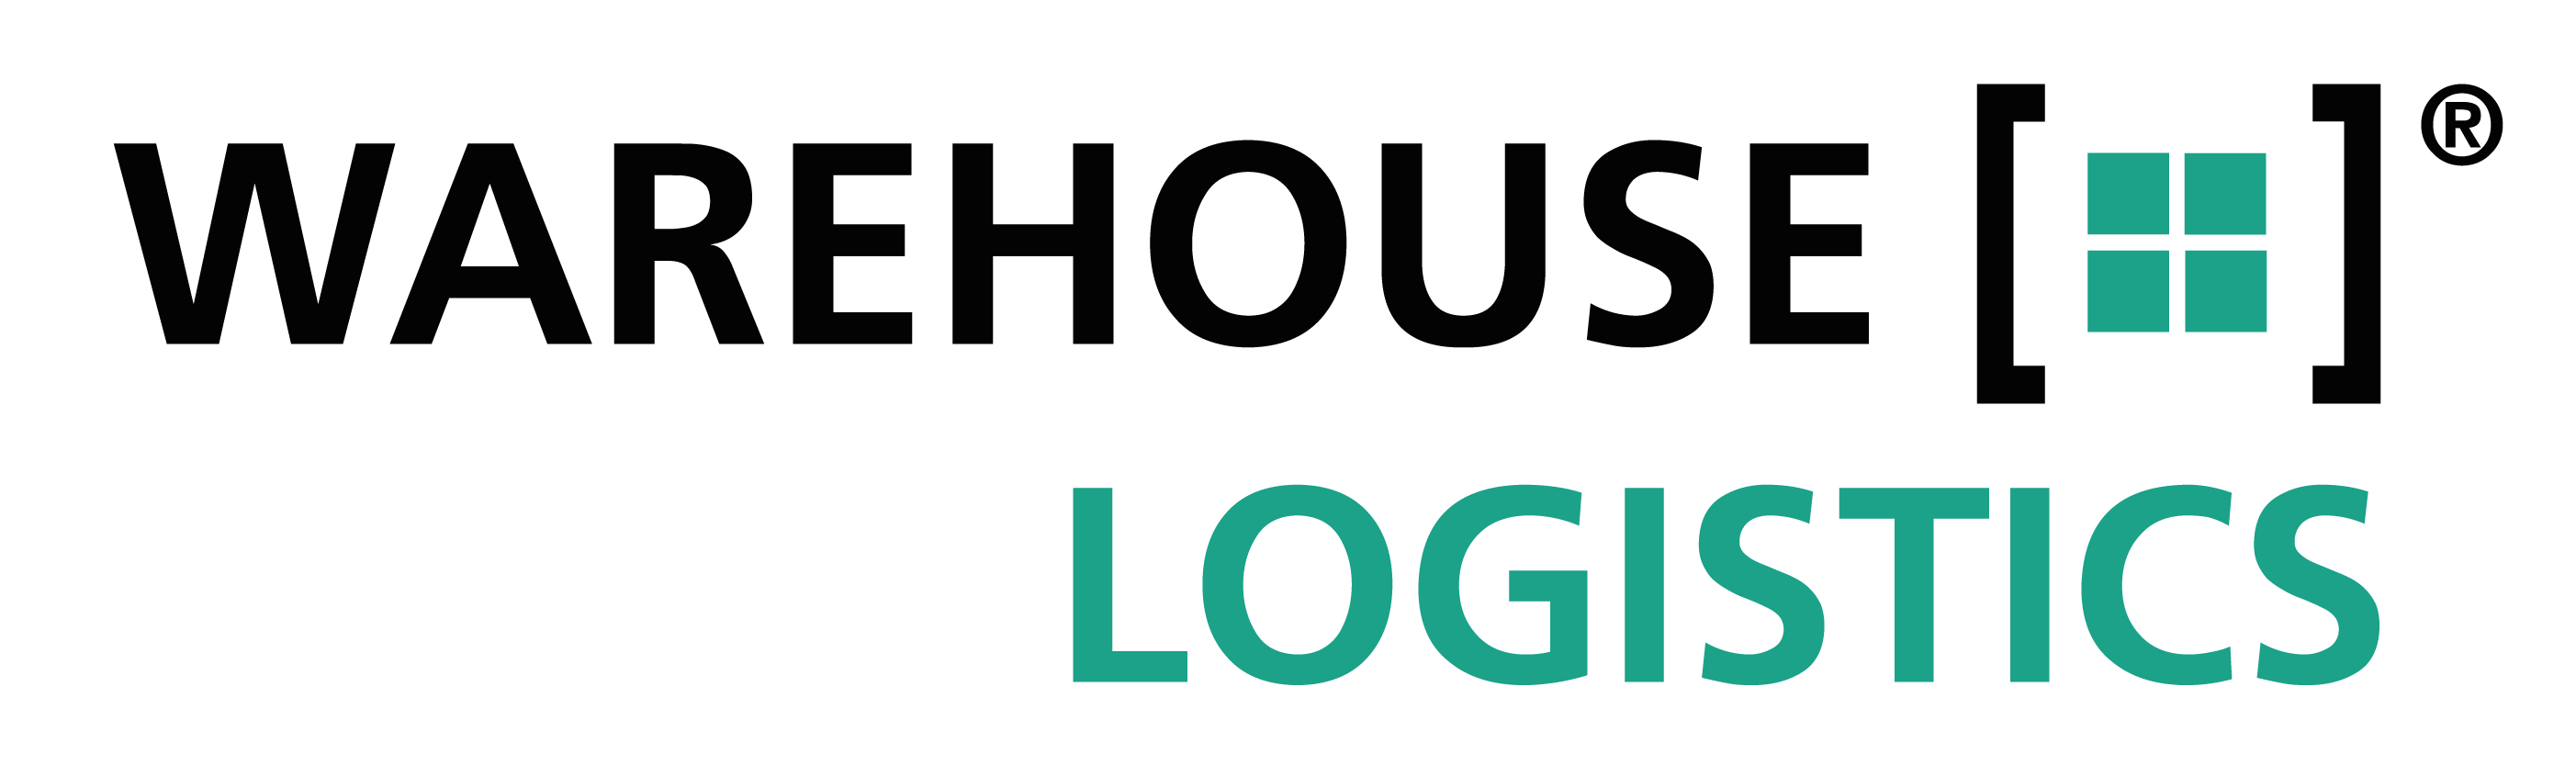 warehouse-logistics: Startseite